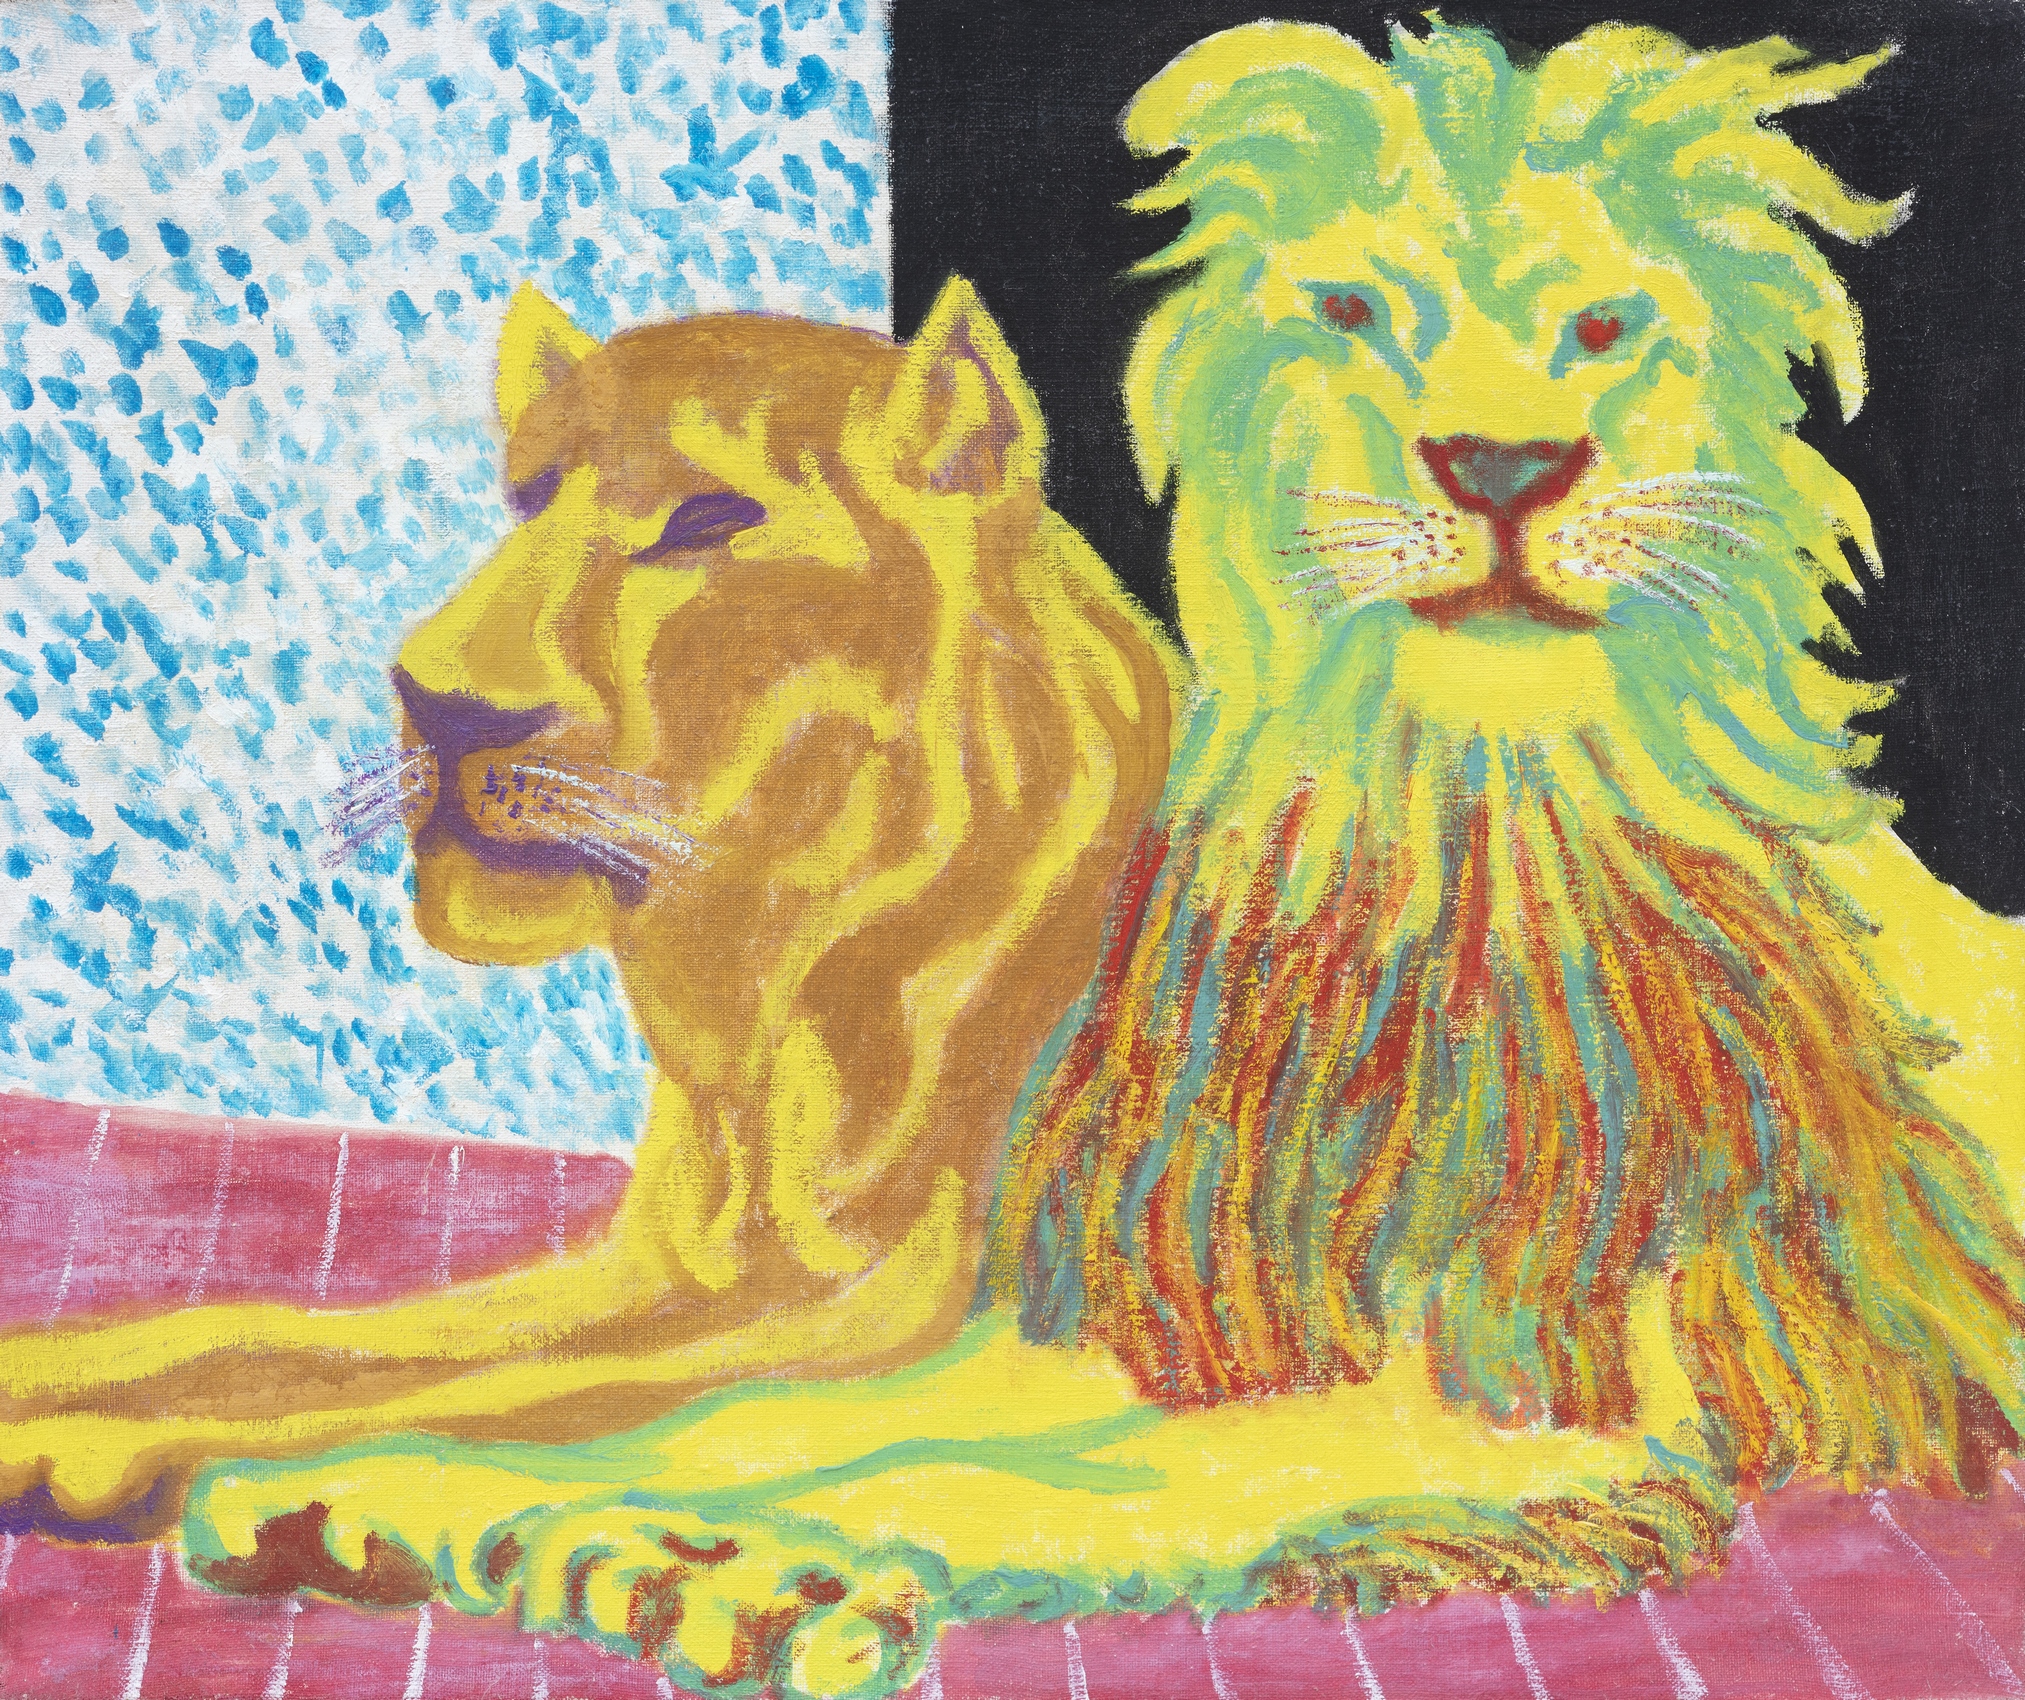 Camenisch Paul - Paire expressive de lions II